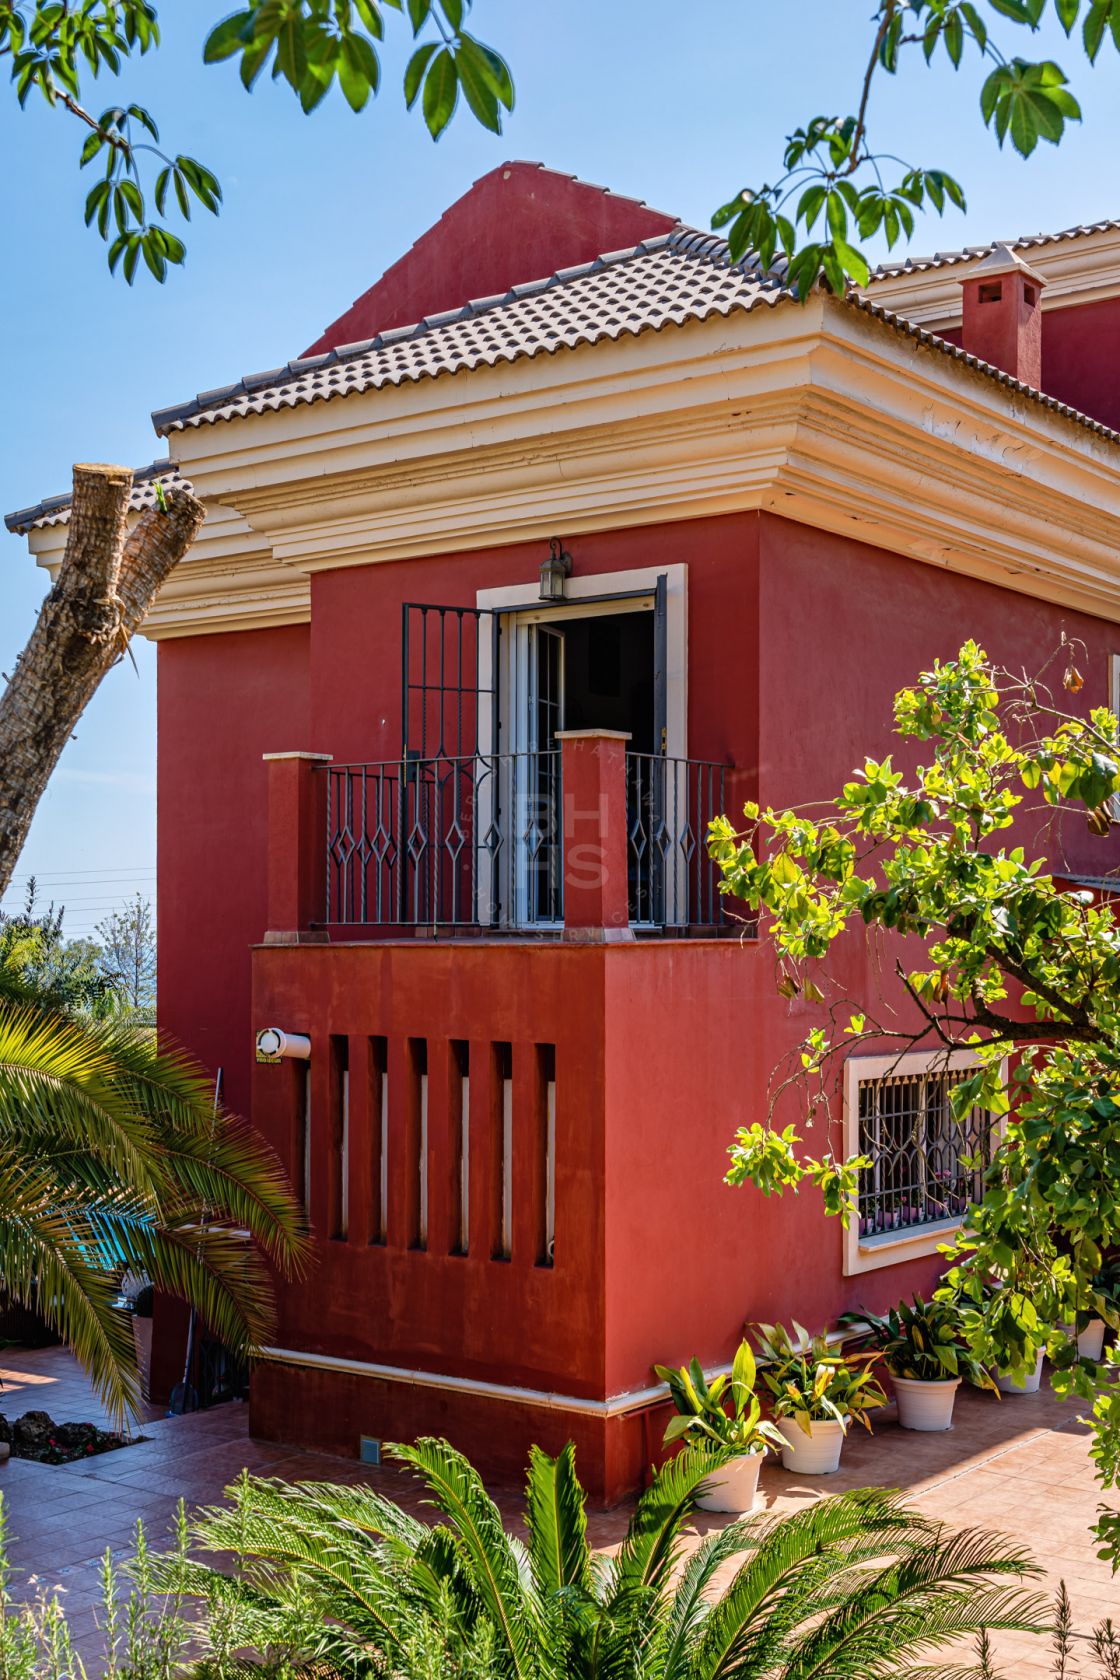 Splendid family villa with sea views in eastern Malaga